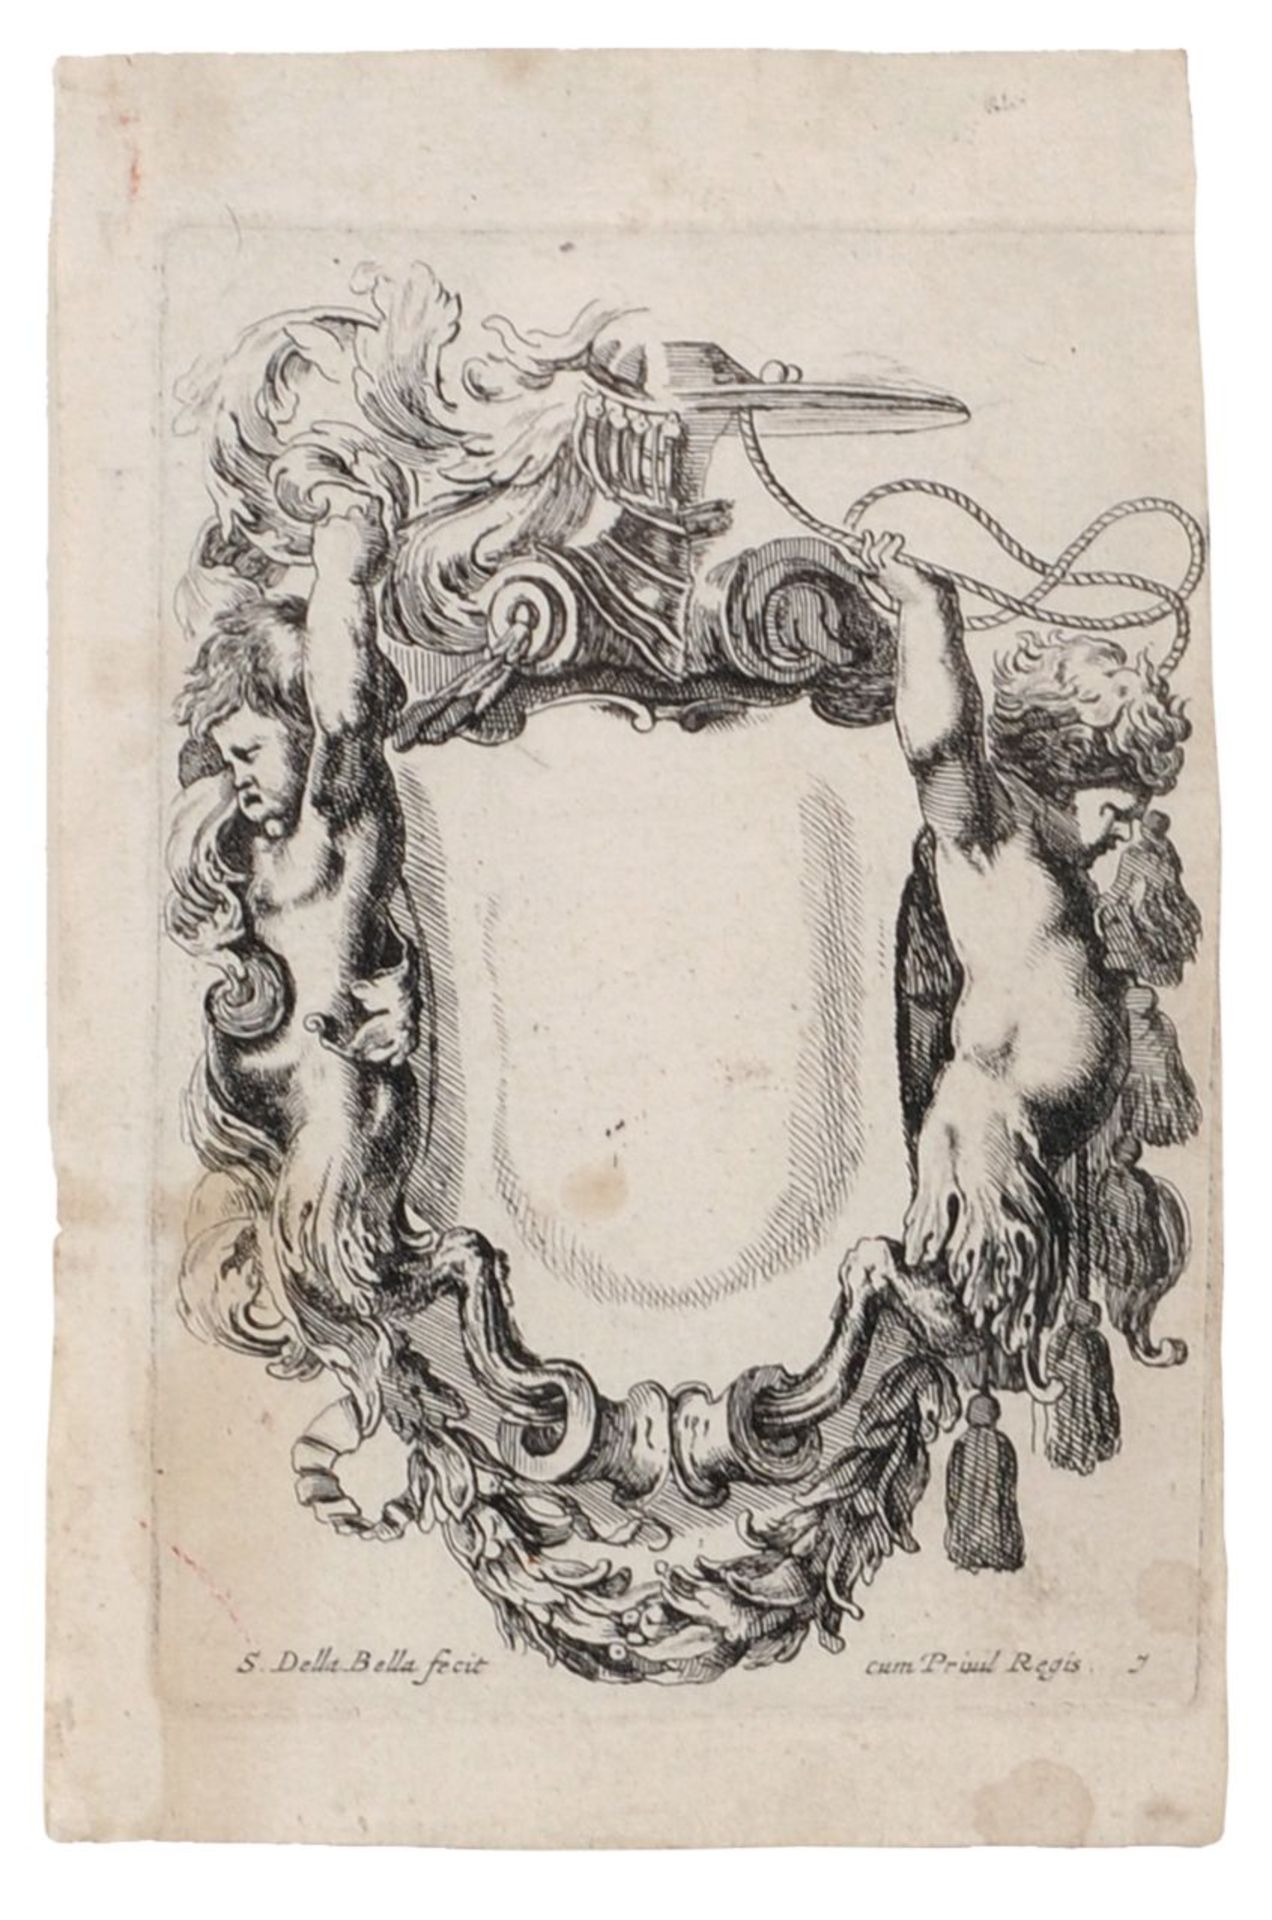 Stefano della Bella, Zwei Blätter aus "Nouvelles inventions de Cartouches". 1647. Stefano della